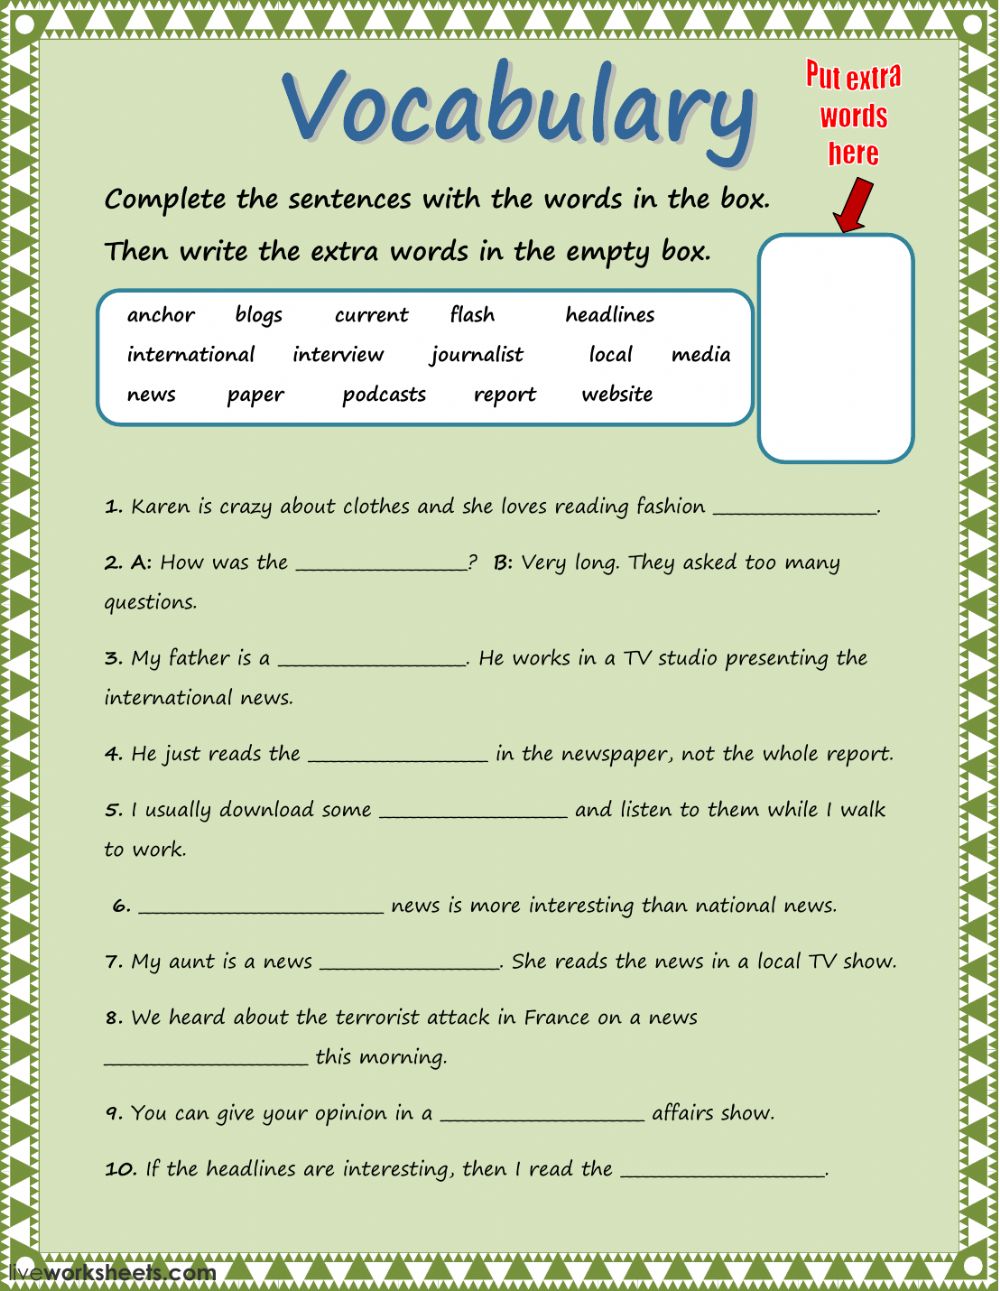 worksheet-ideas-vocabulary-words-worksheets-image-with-vocabulary-words-worksheet-template